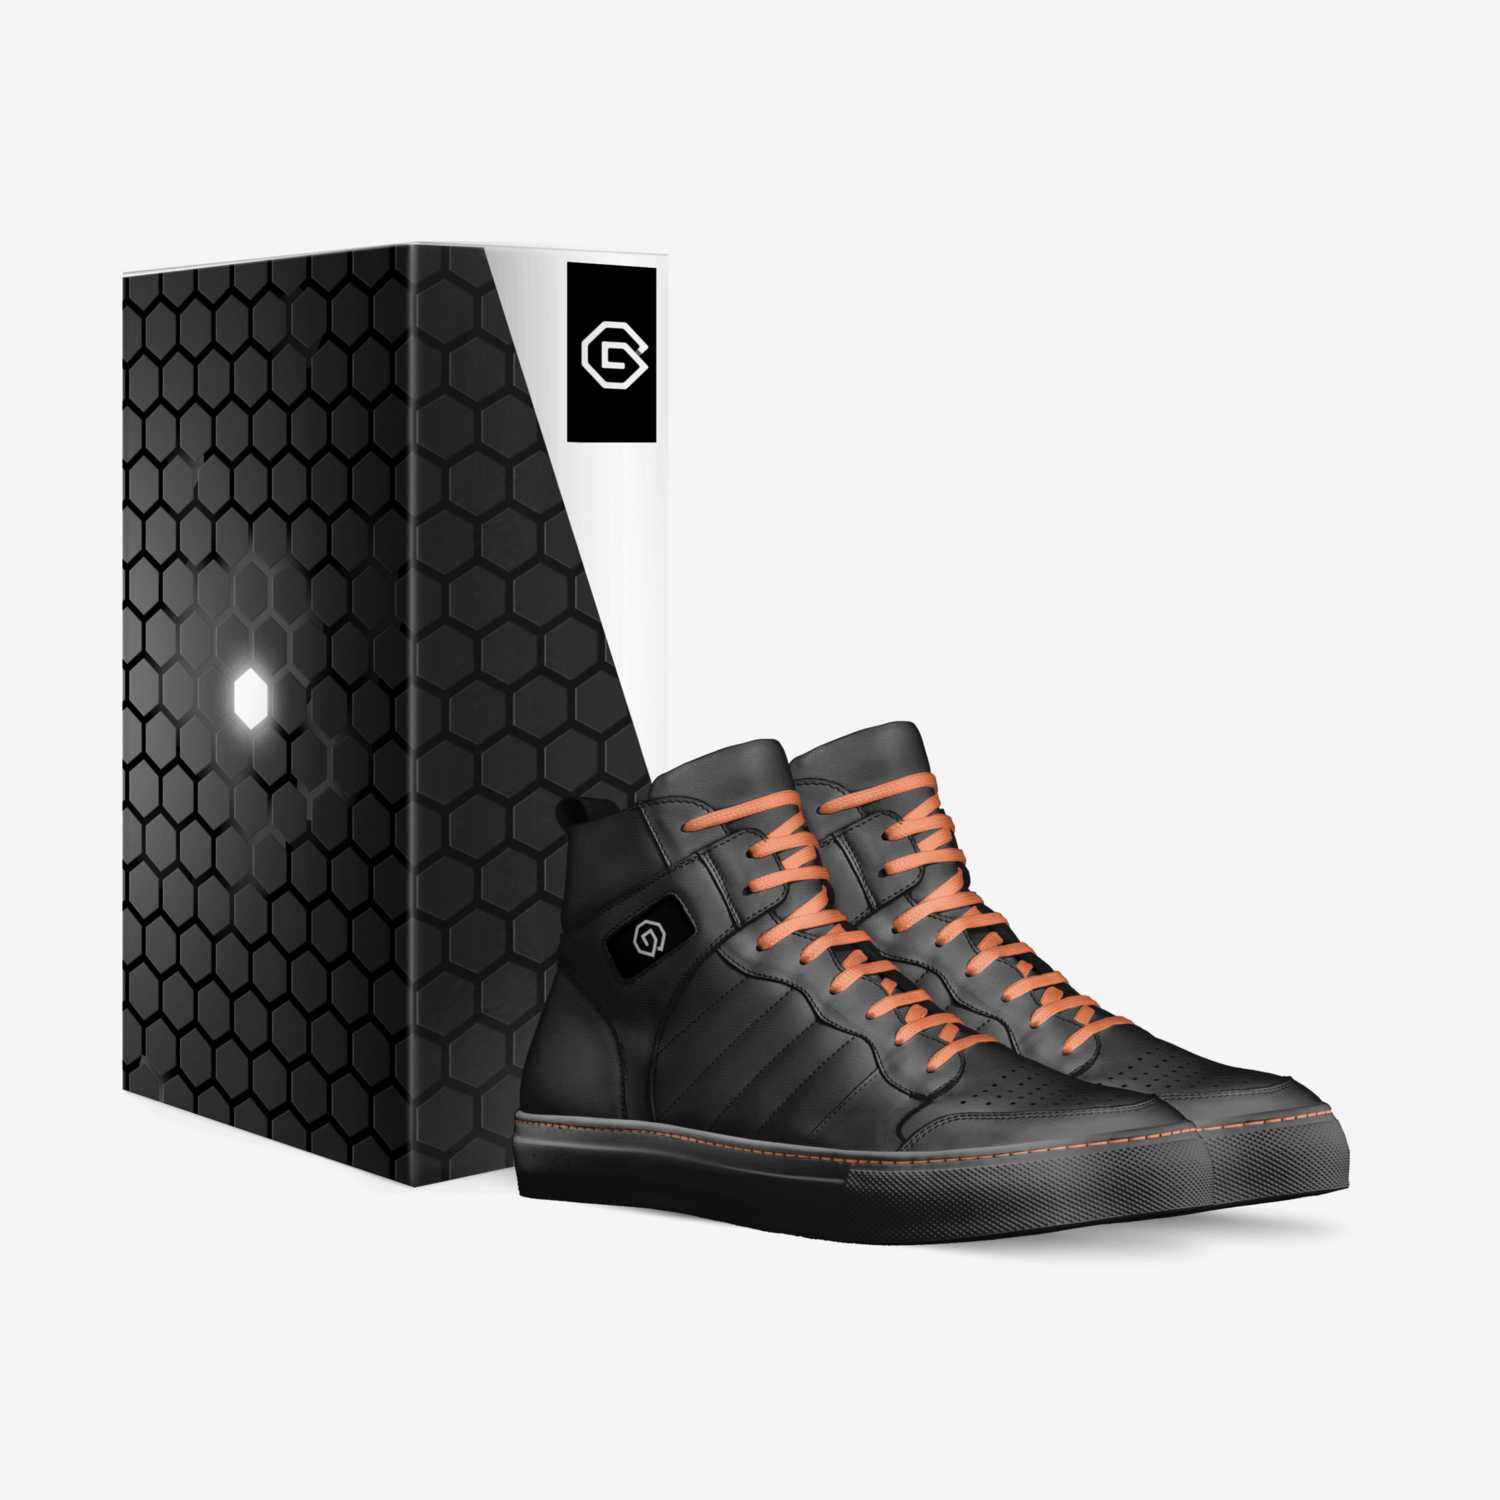 Gwaynes custom made in Italy shoes by Garrett Edens | Box view